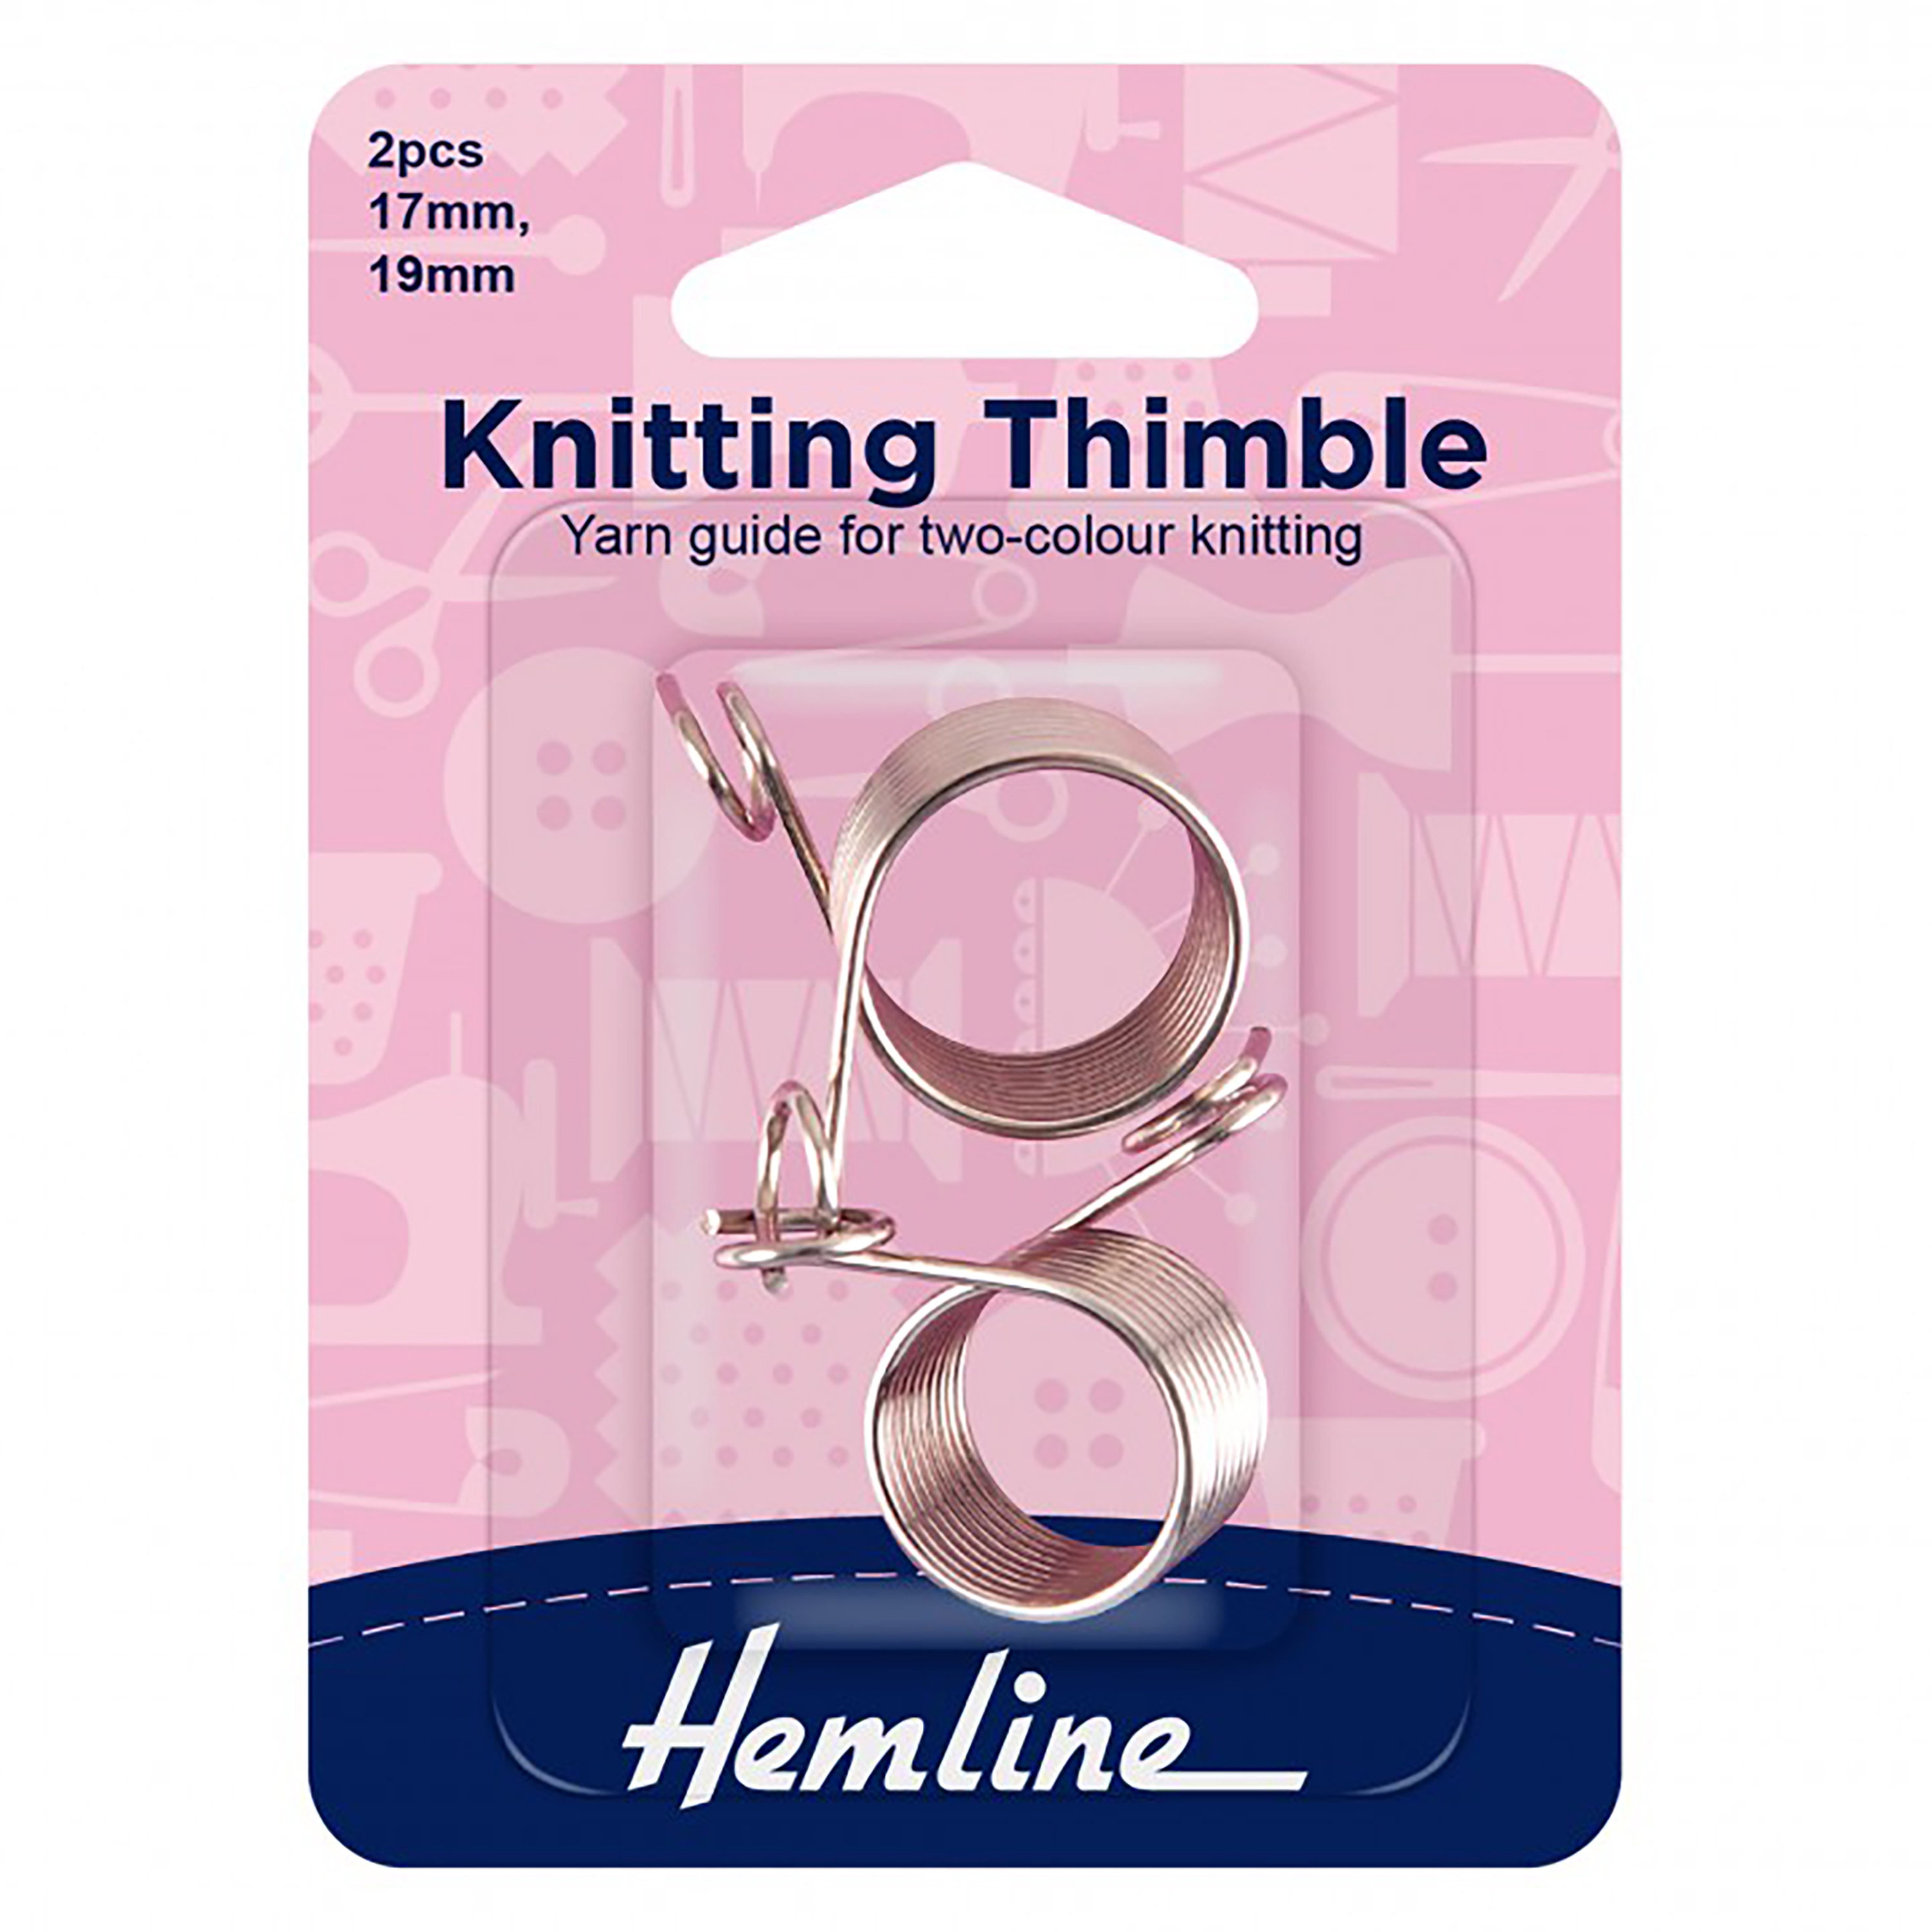 Knitting Thimble – The Yarnery